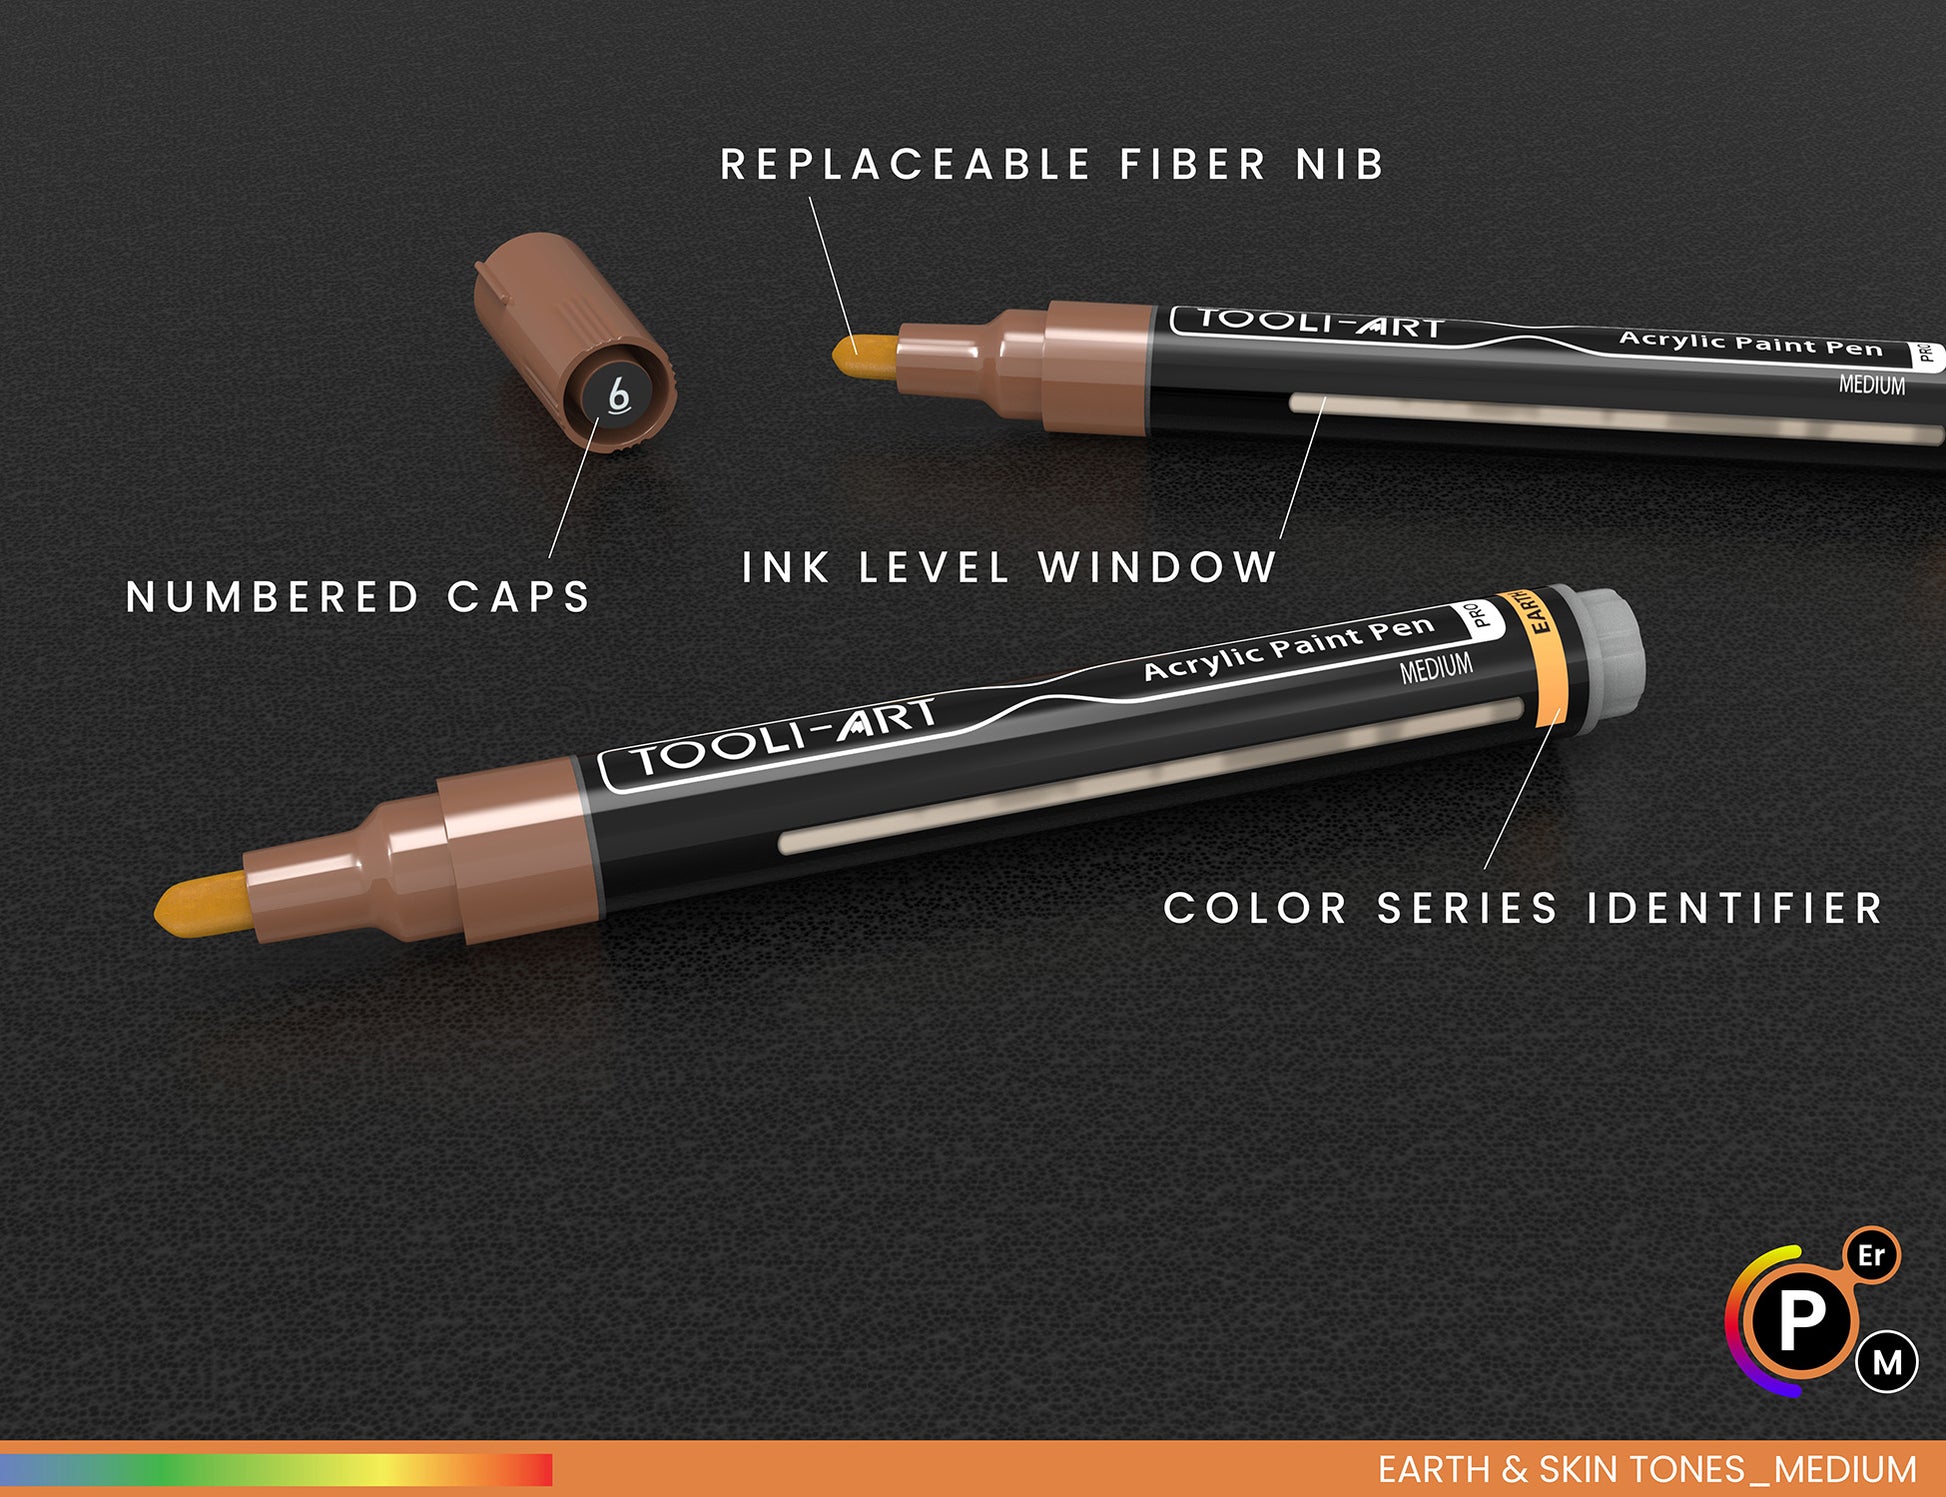 Dual Tip Premium Acrylic Paint Pens Markers 12/24/36 Colors Set Paint Pens  for Rock Painting, Ceramic, Glass, Wood, Canvas, DIY Crafts 